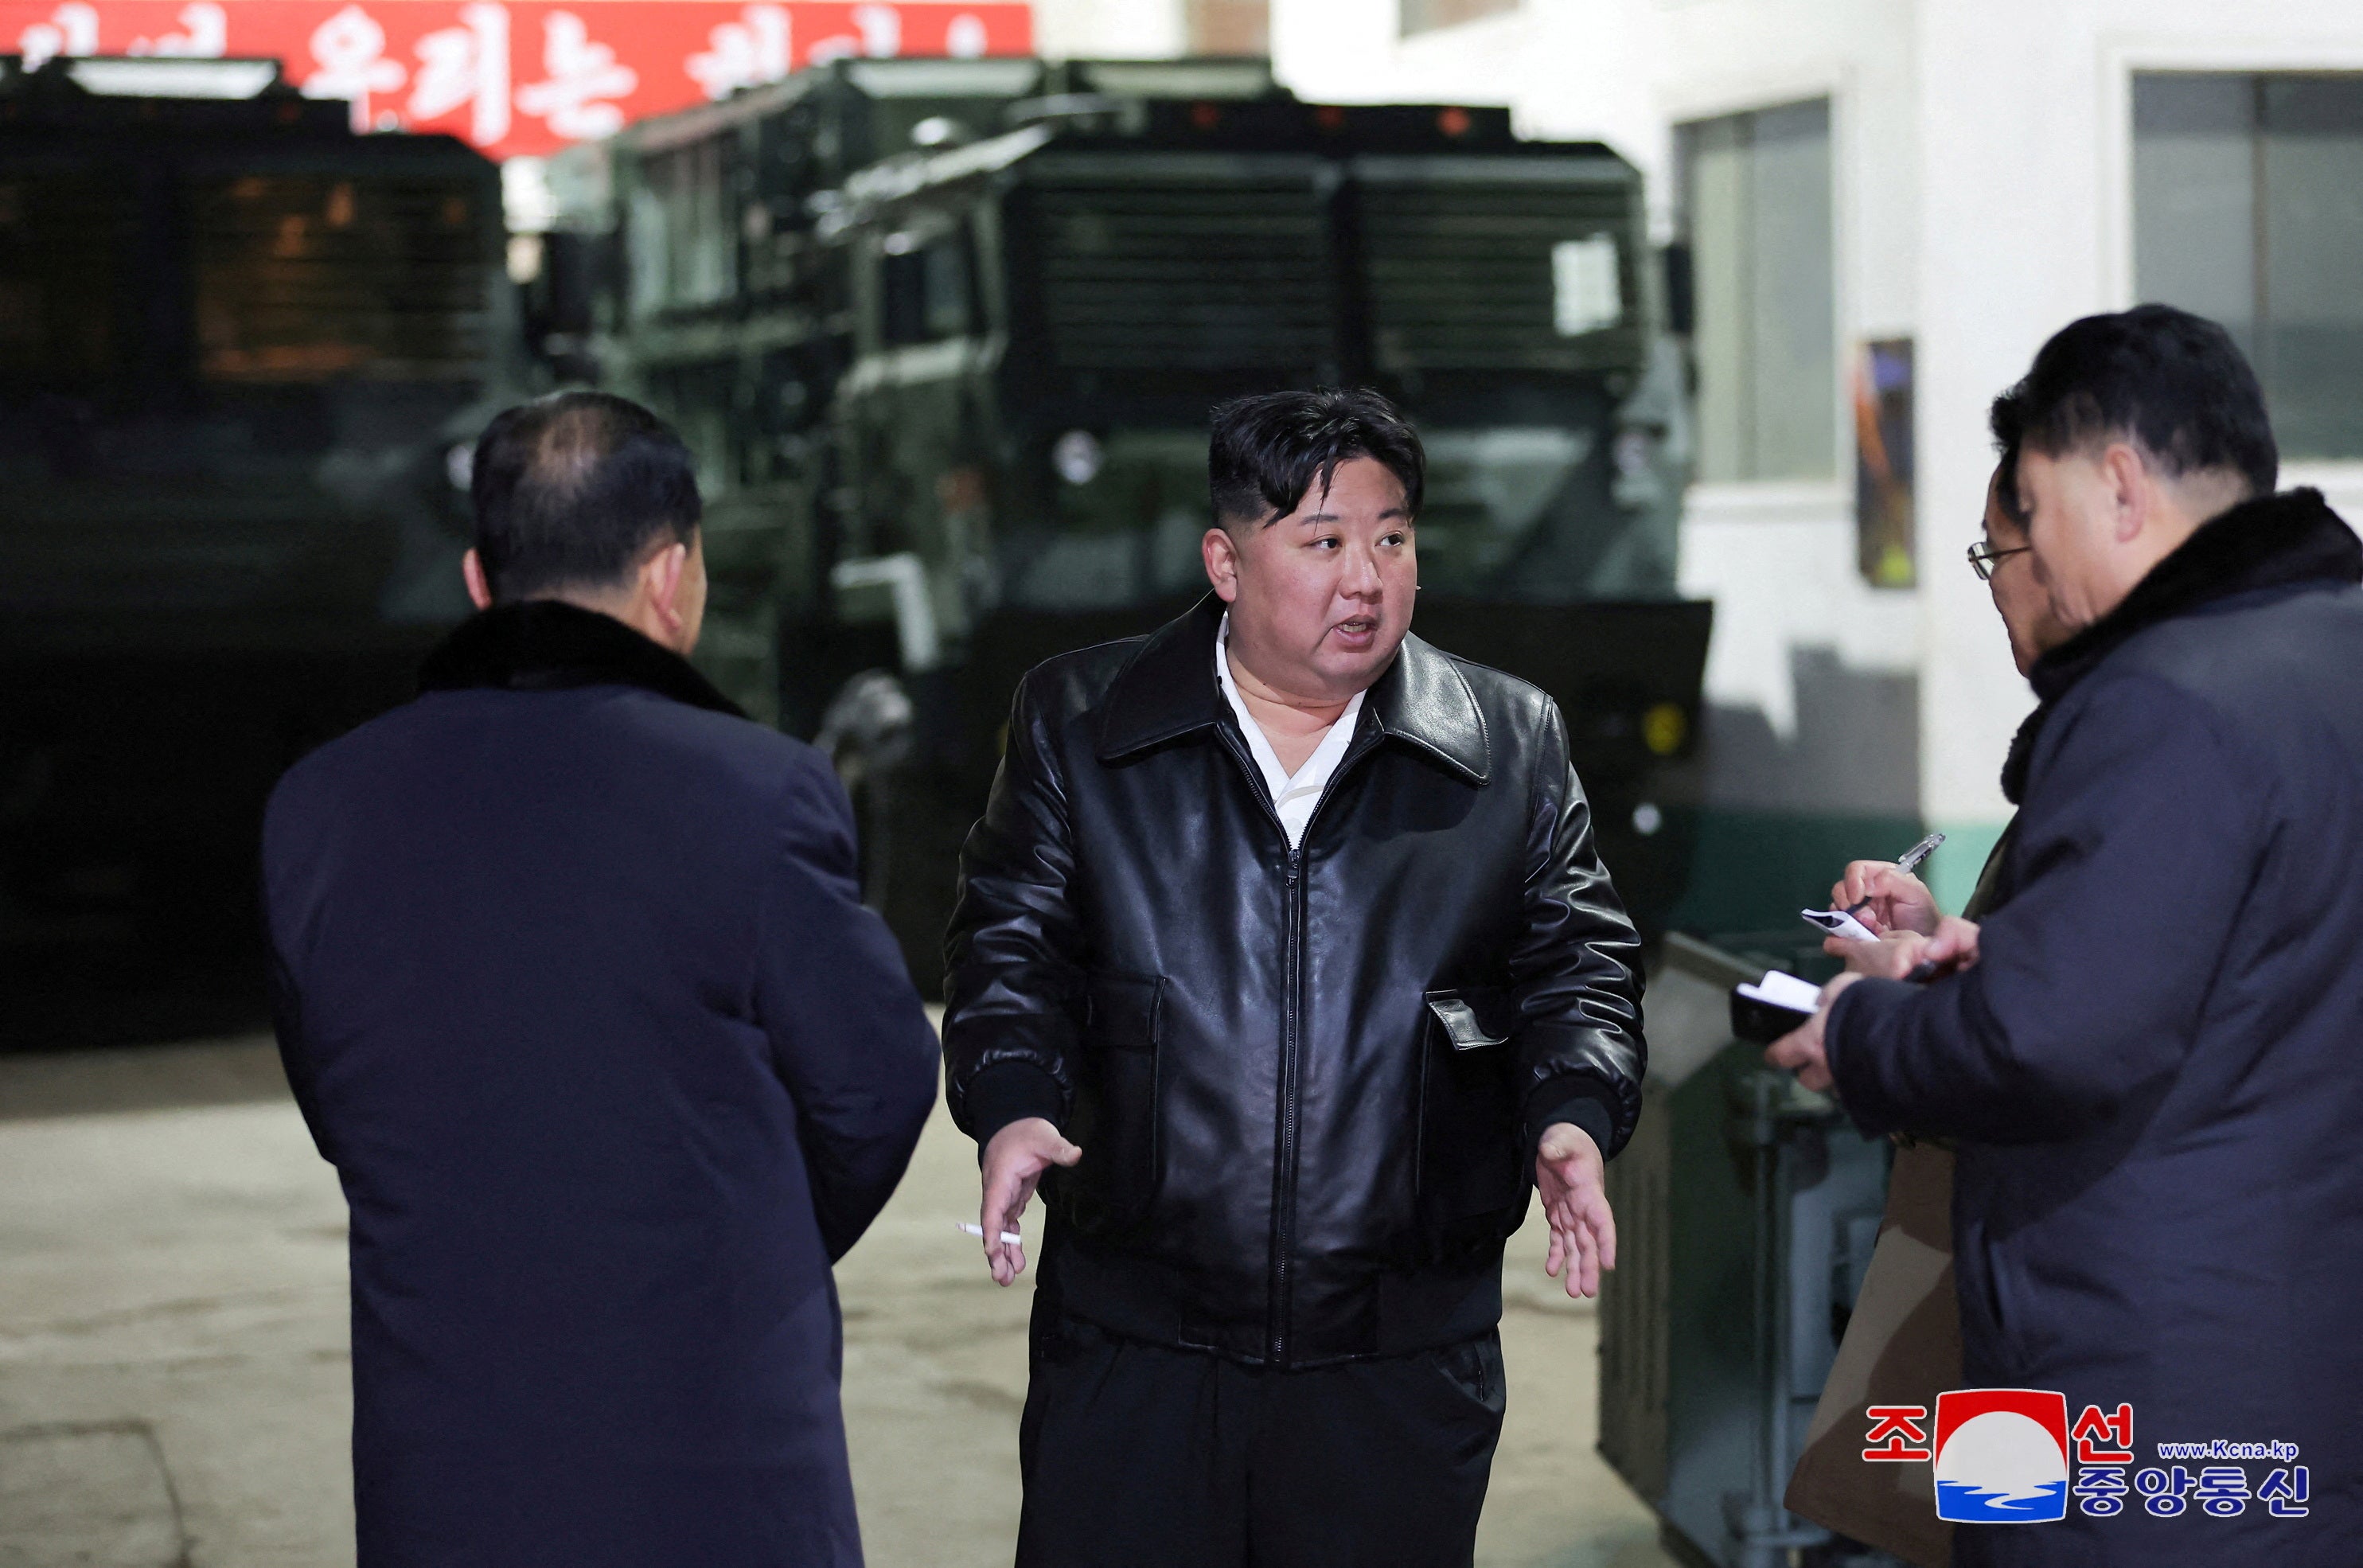 North Korean leader Kim Jong Un speaks to officials at a munitions factory